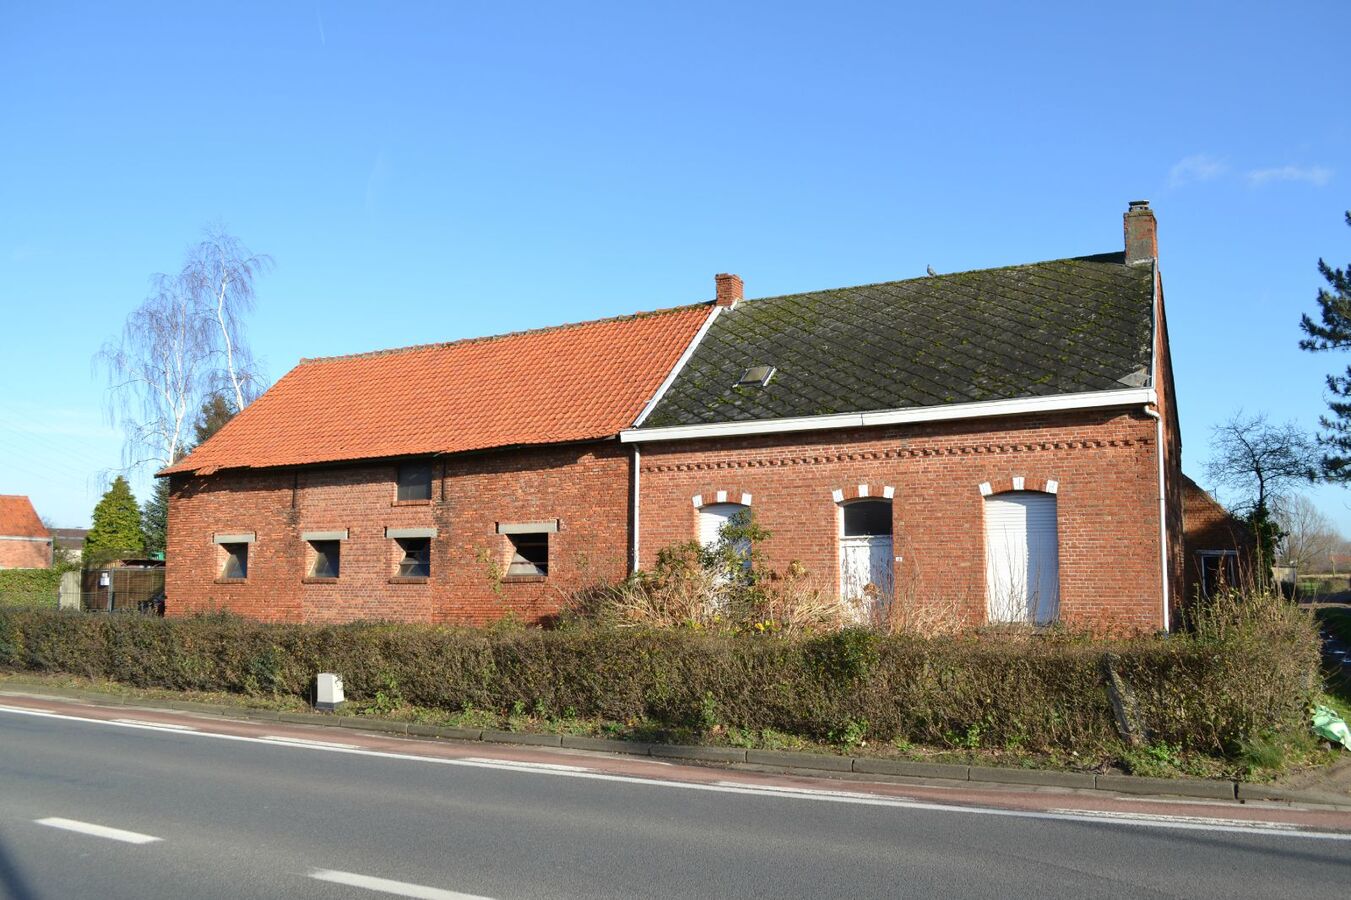 Property sold in Sint-Pauwels